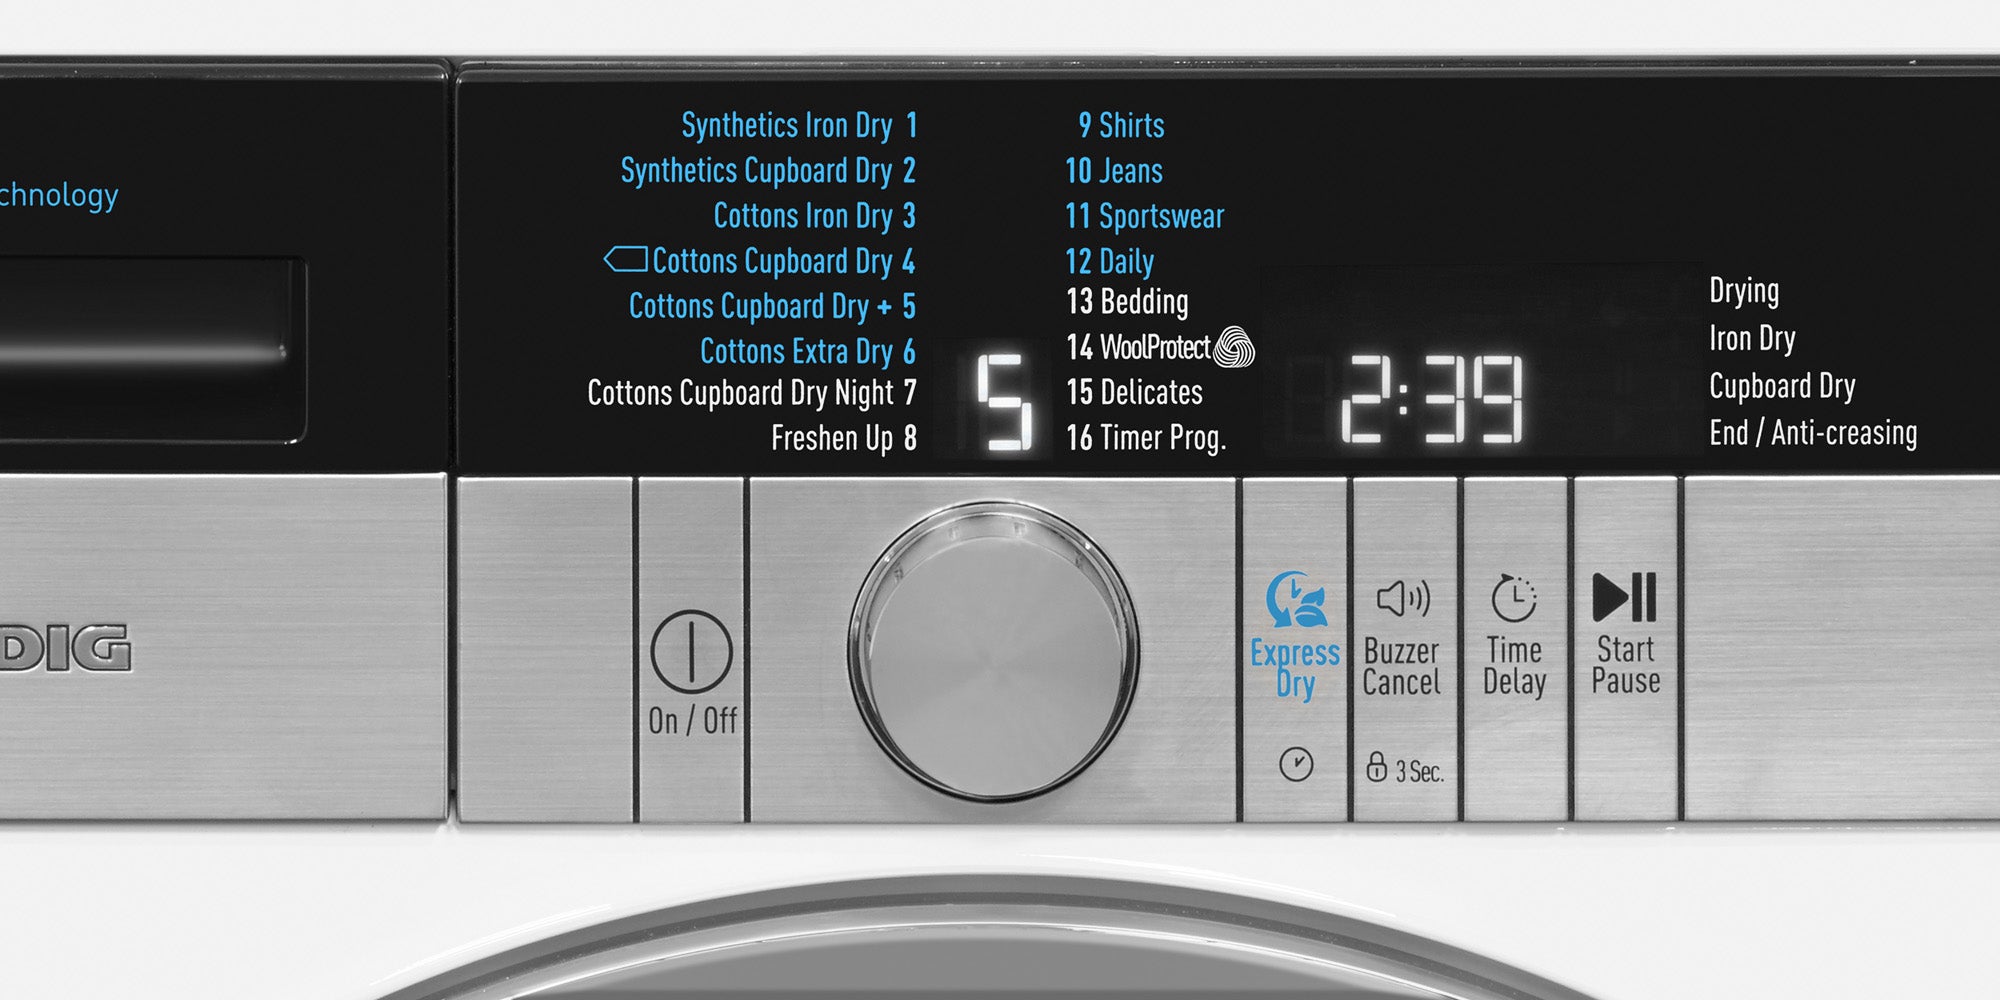 Grundig dryer control panel with program options and digital display.